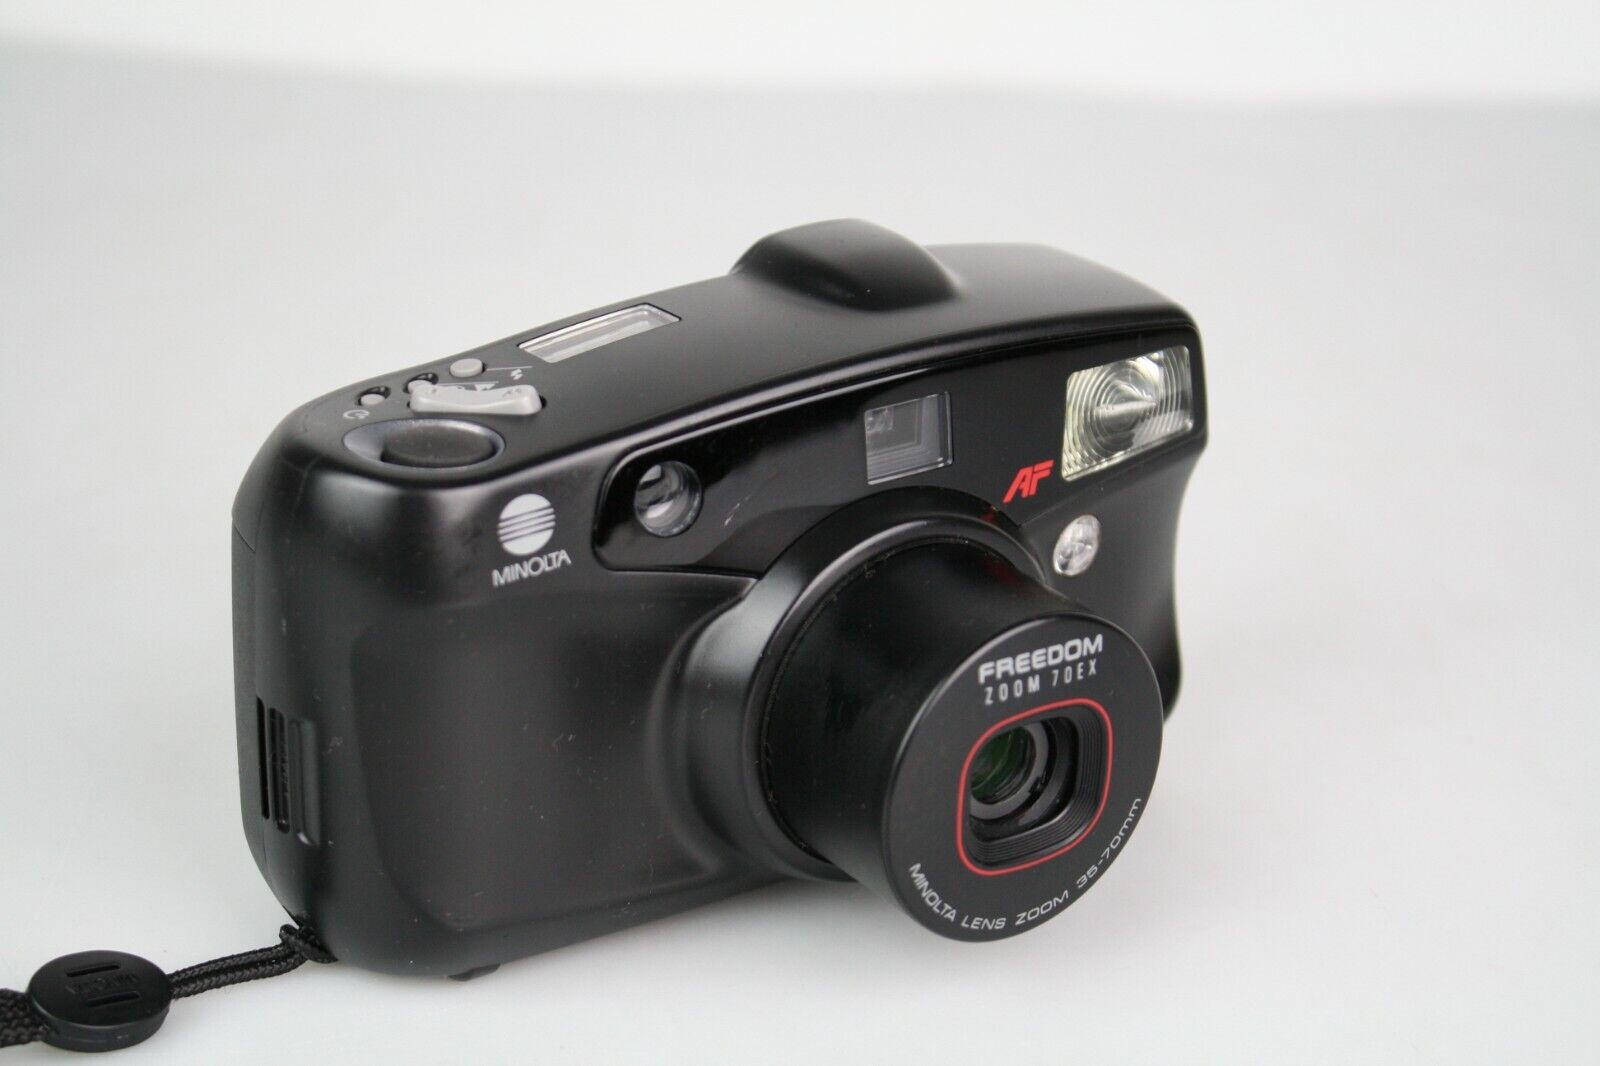 Minolta Freedom Zoom 70EX Point & Shoot 35mm Film Camera Black Tested Works